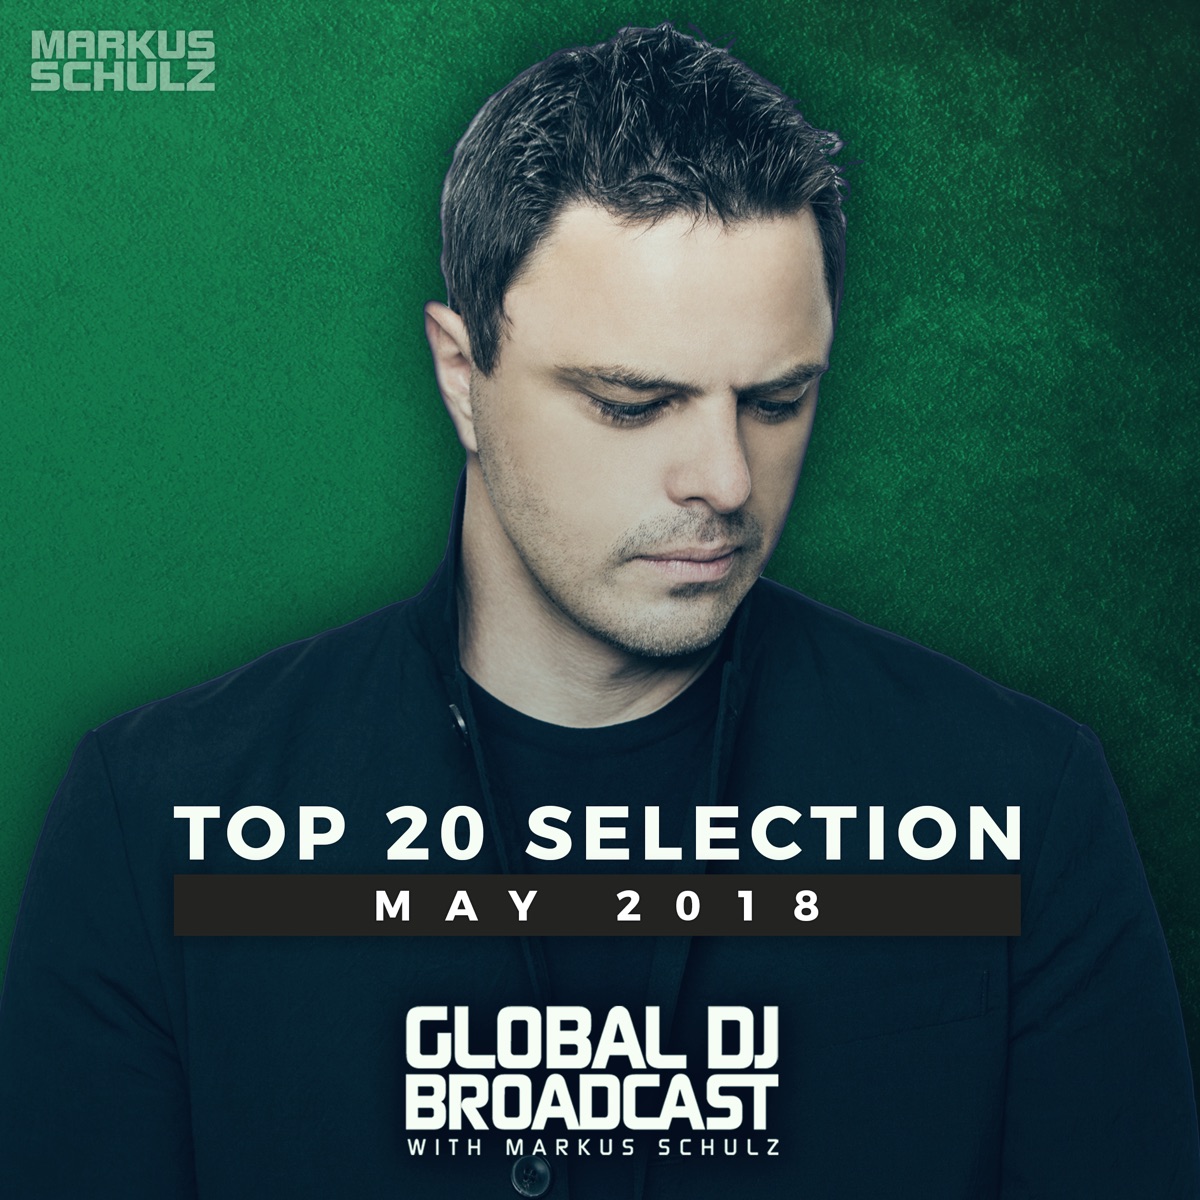 Global DJ Broadcast - Top 20 December 2019 di Markus Schulz - Global DJ  Broadcast su Apple Music